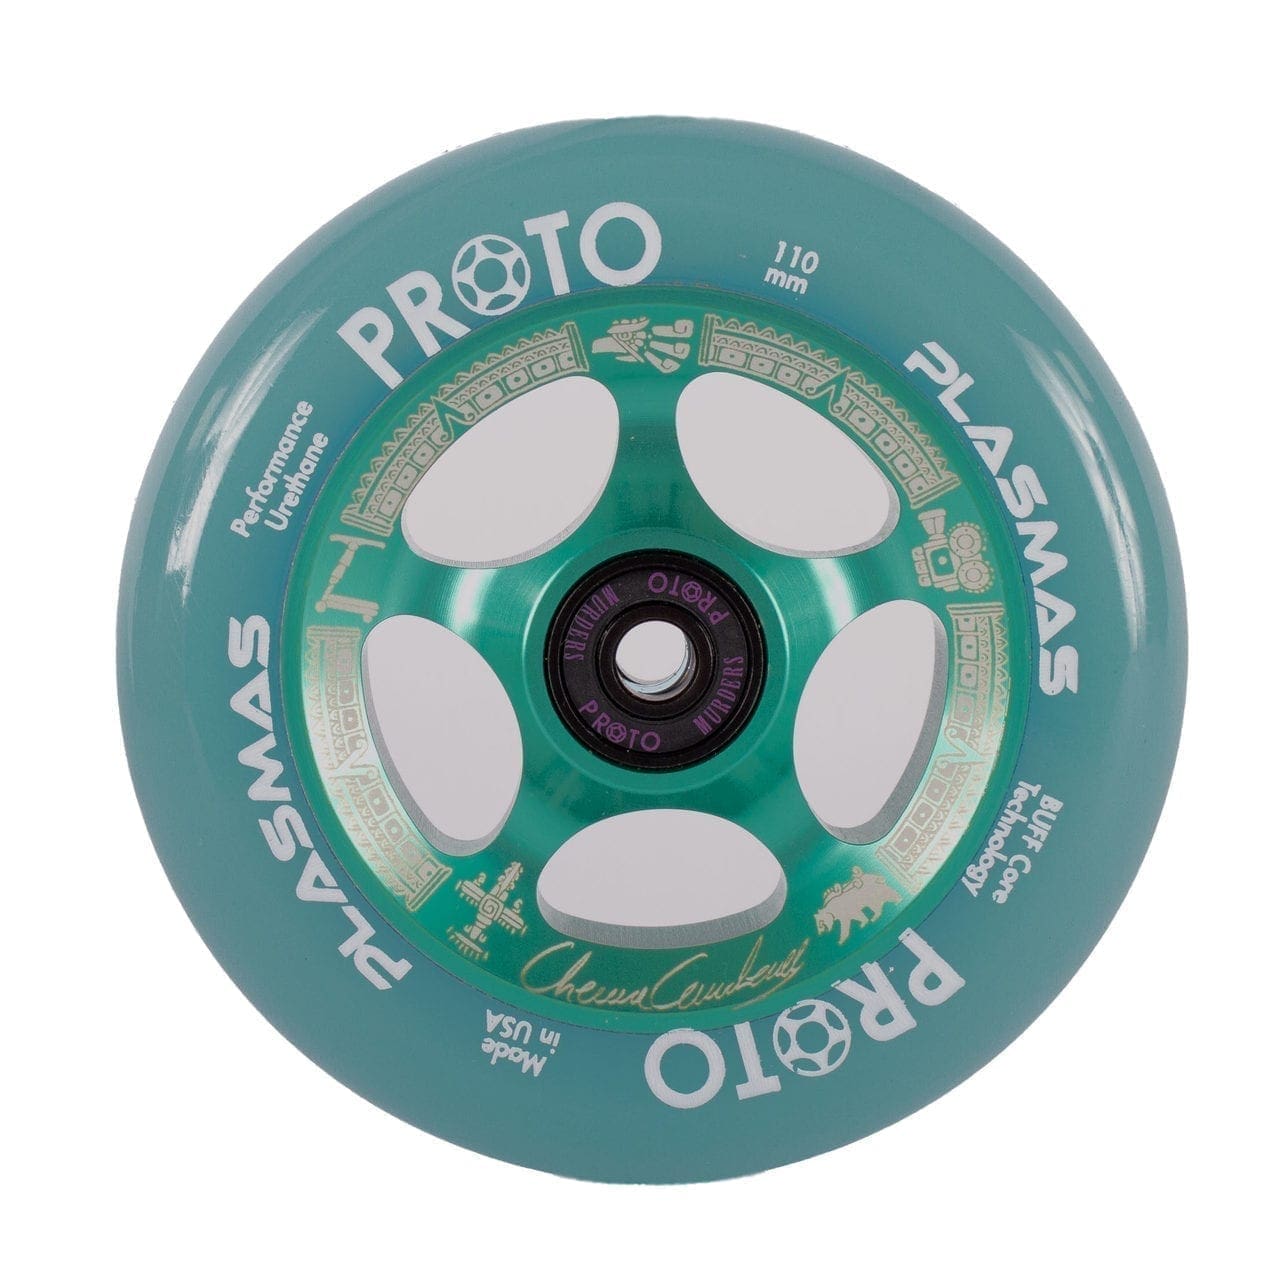 Proto Relic Plasma Wheels - Chema Cardenas Sig. 110 mm